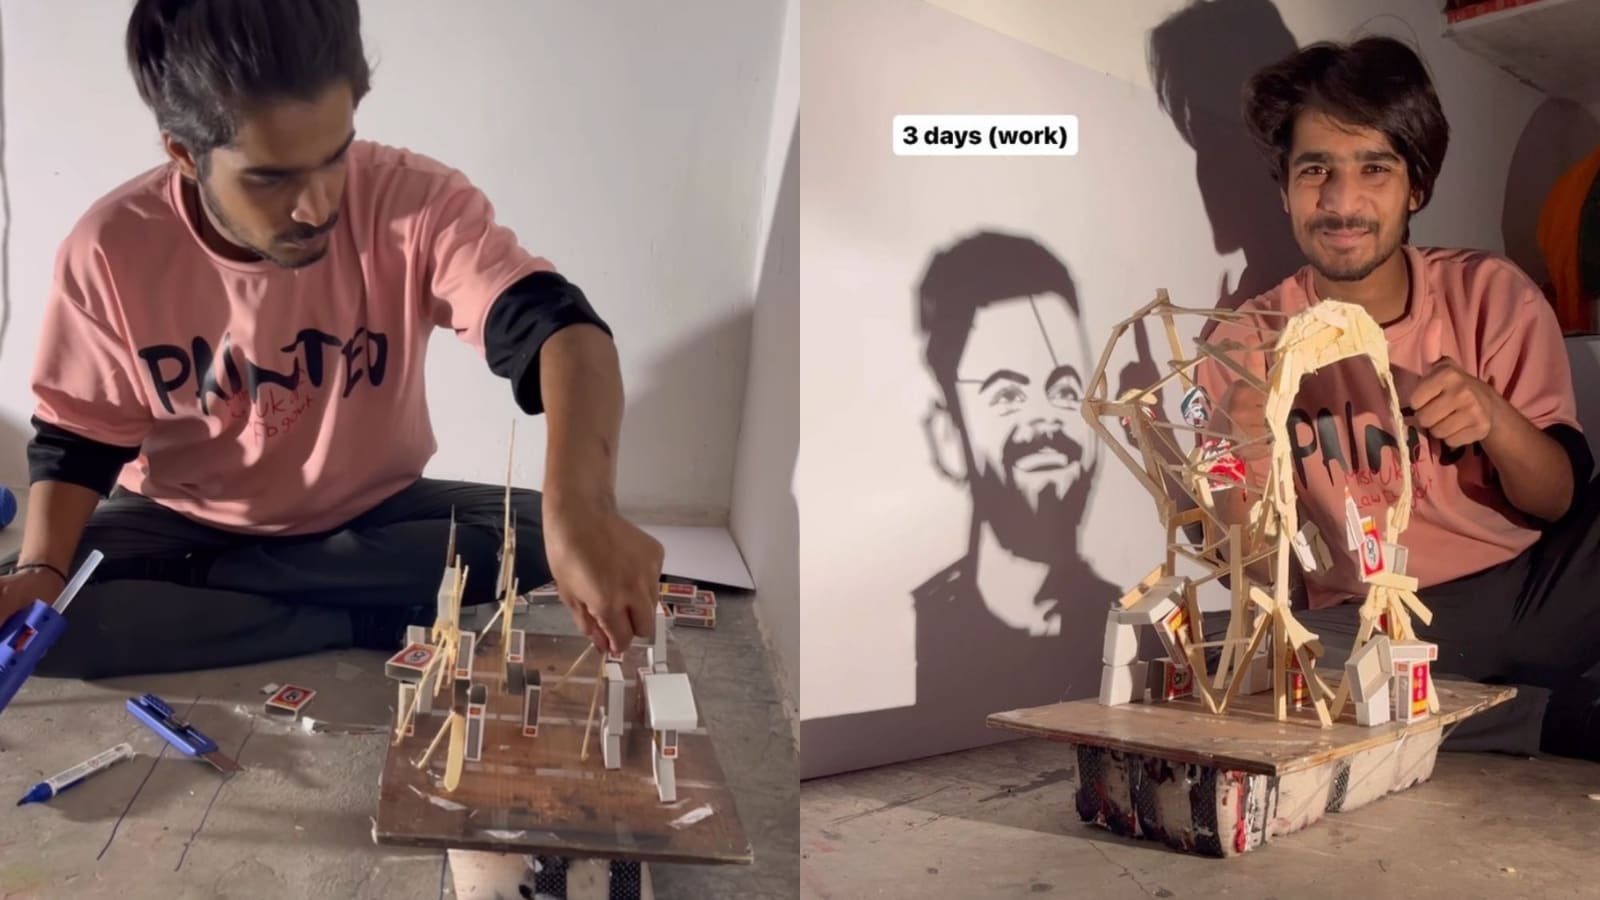 Artist creates Virat Kohli’s shadow portrait using matchboxes and wooden sticks, stuns people